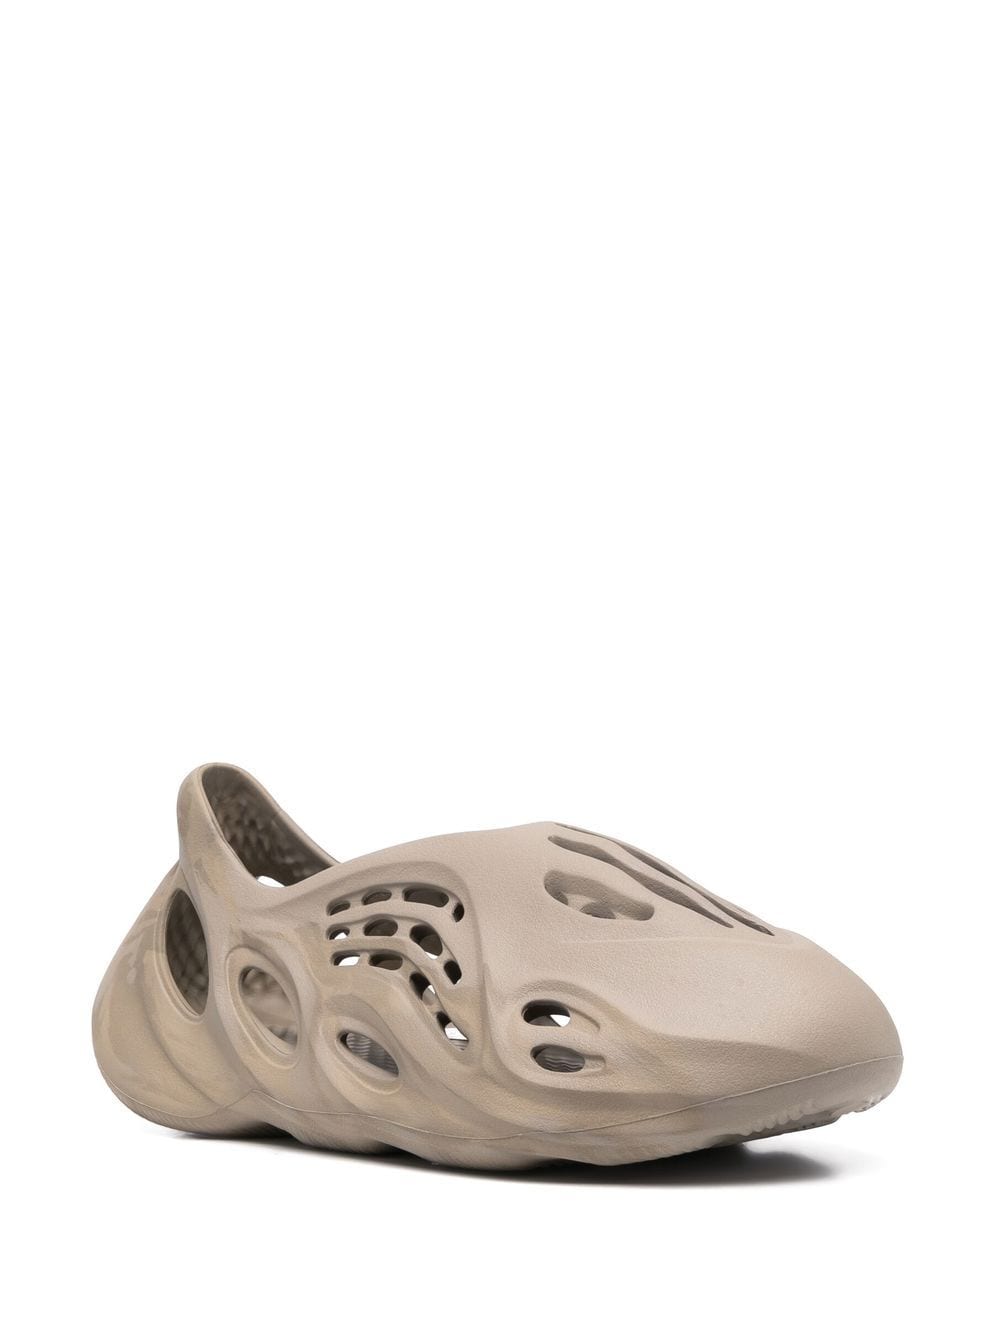 adidas Yeezy YEEZY Foam Runner "Stone Sage" sneakers - Neutrals